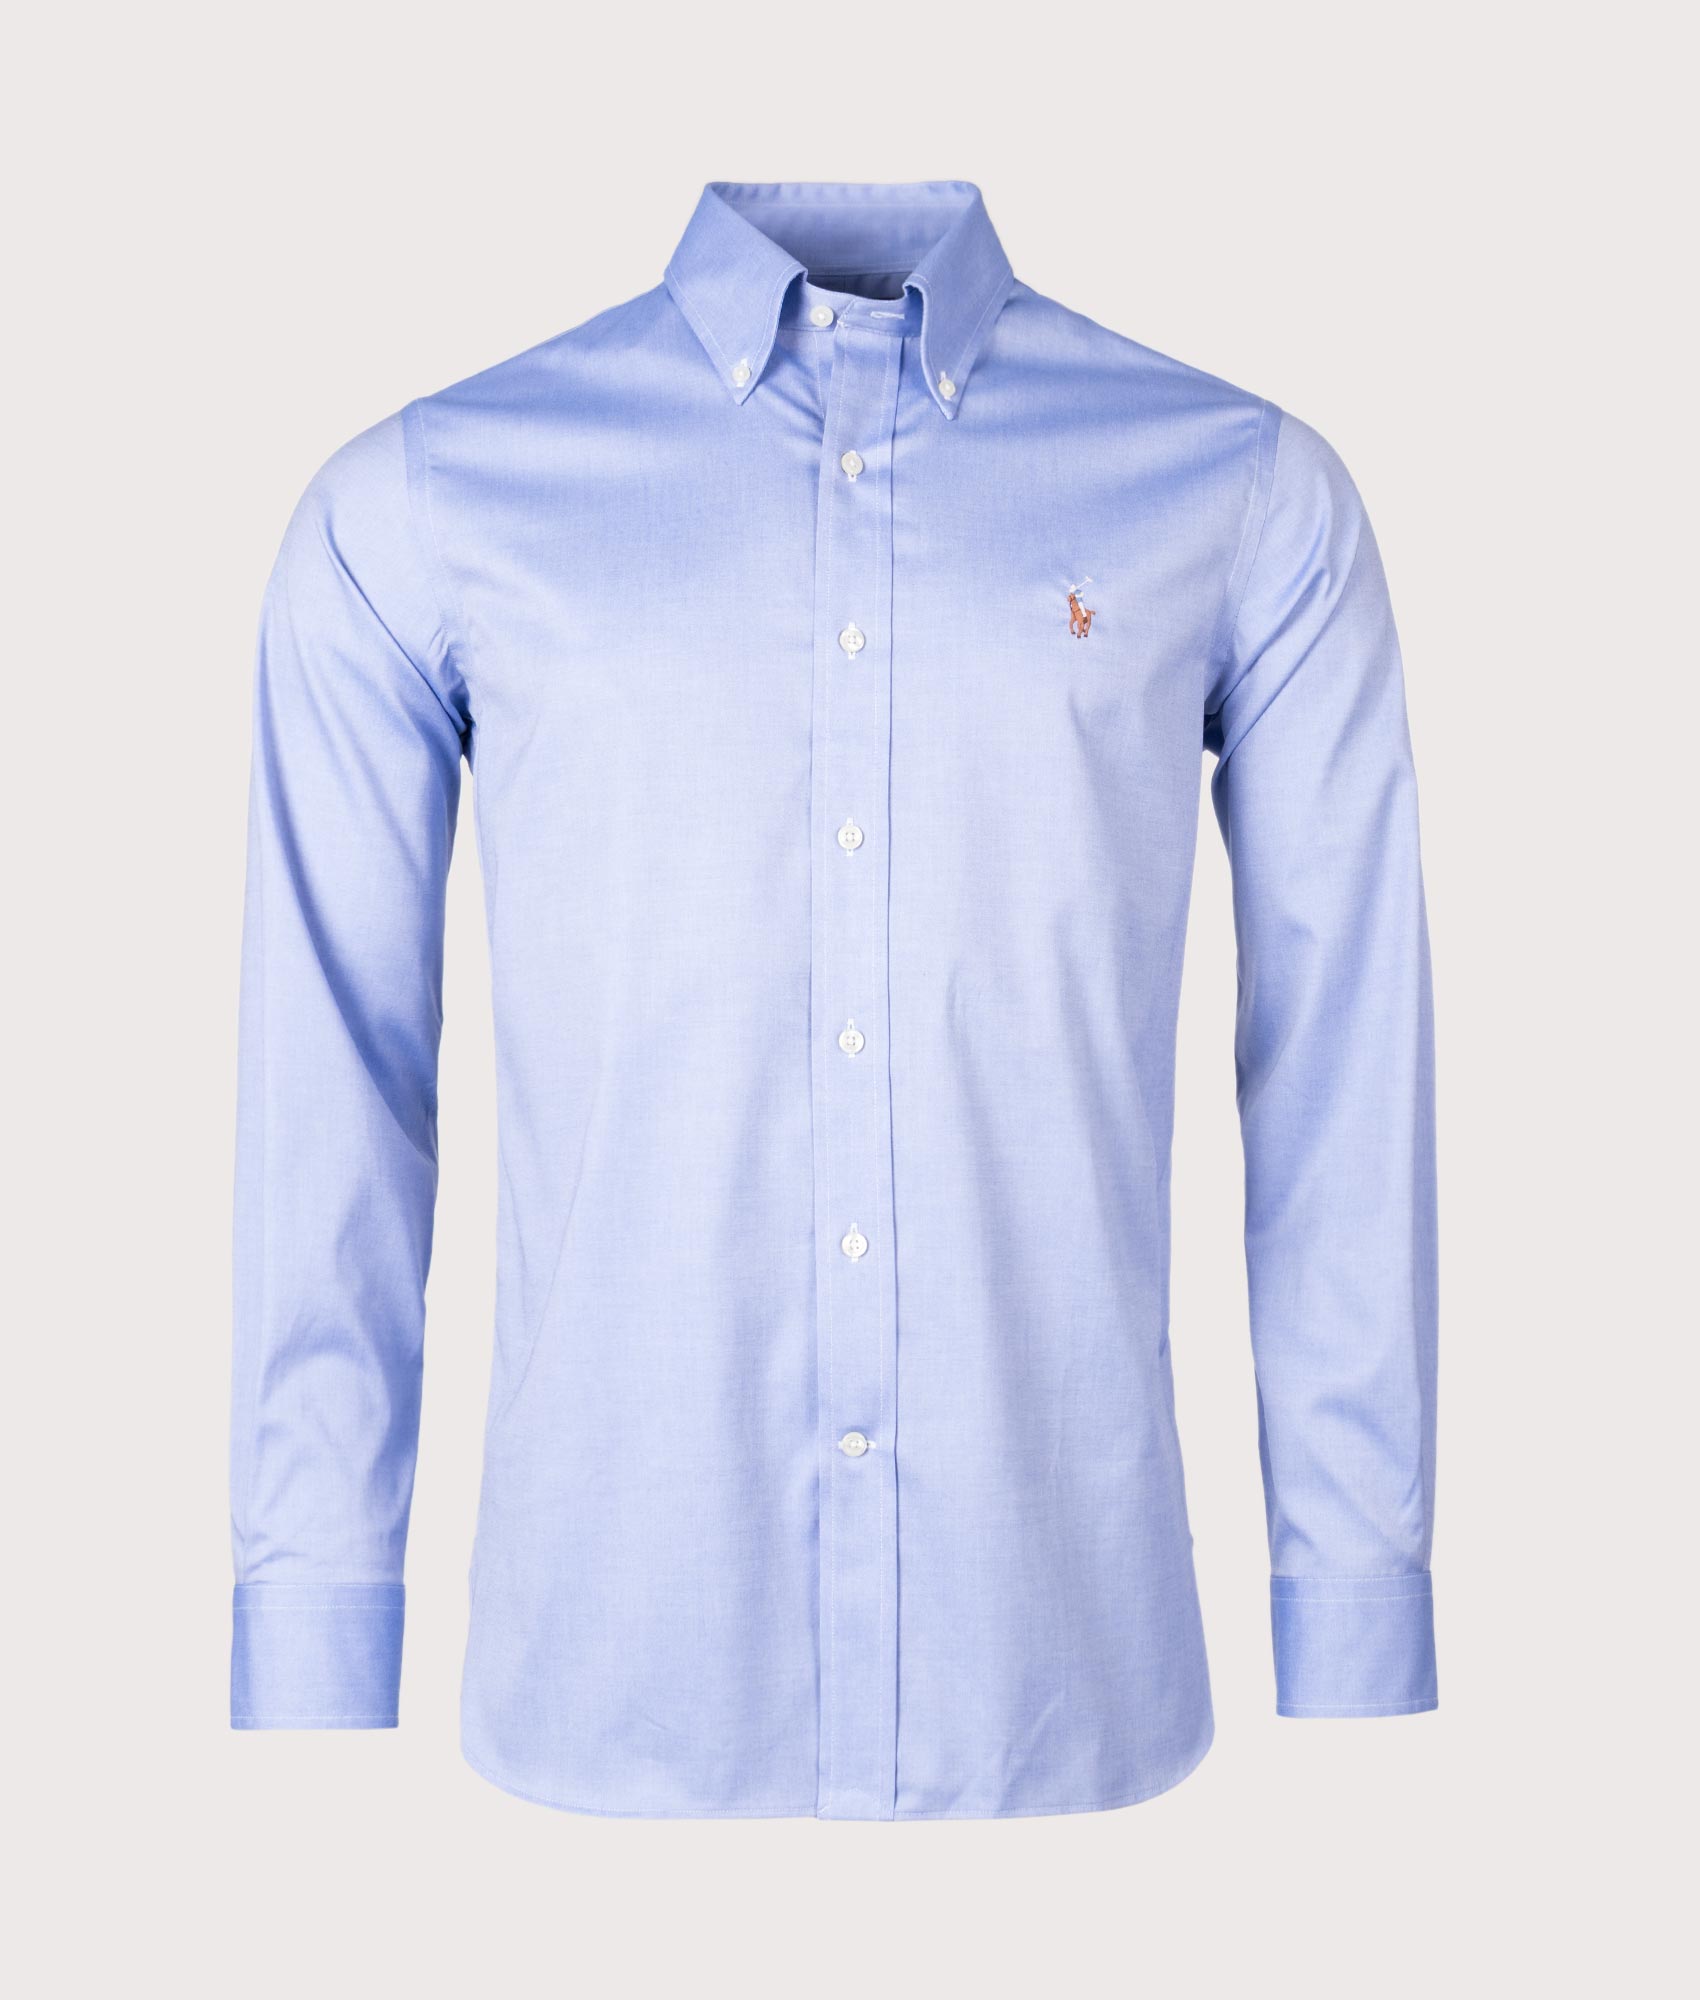 Polo Ralph Lauren Mens Custom Fit Oxford Dress Shirt - Colour: 002 True Blue/White - Size: XL/17.5